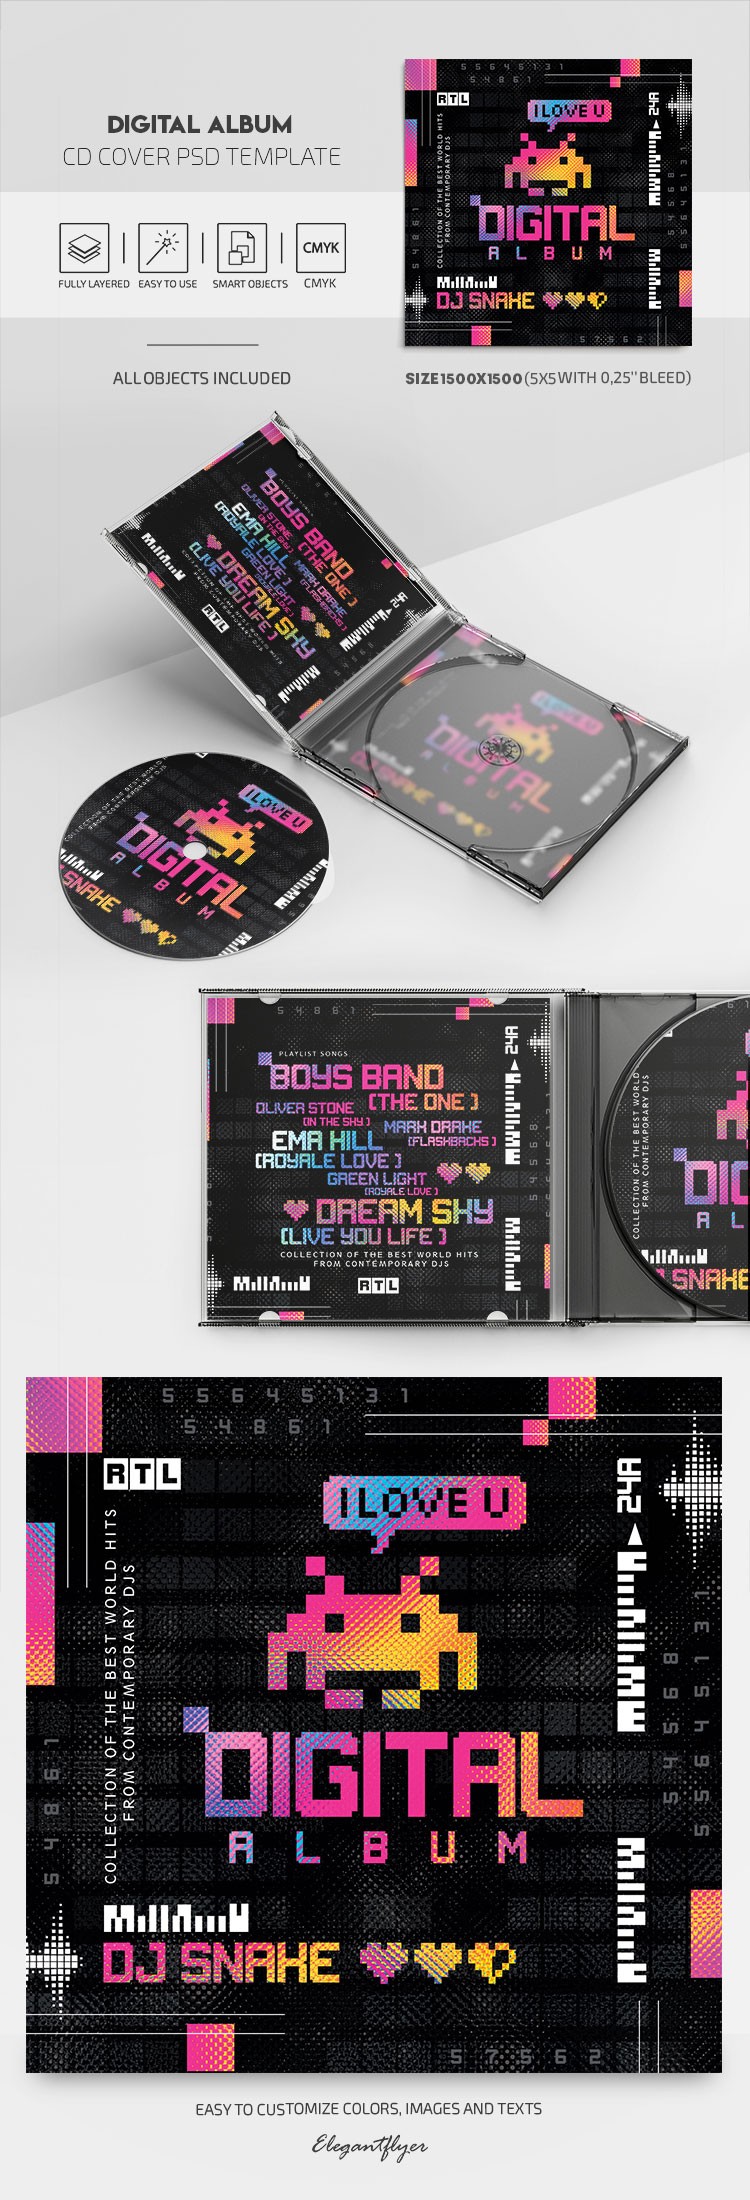 Digitales Album CD-Cover by ElegantFlyer